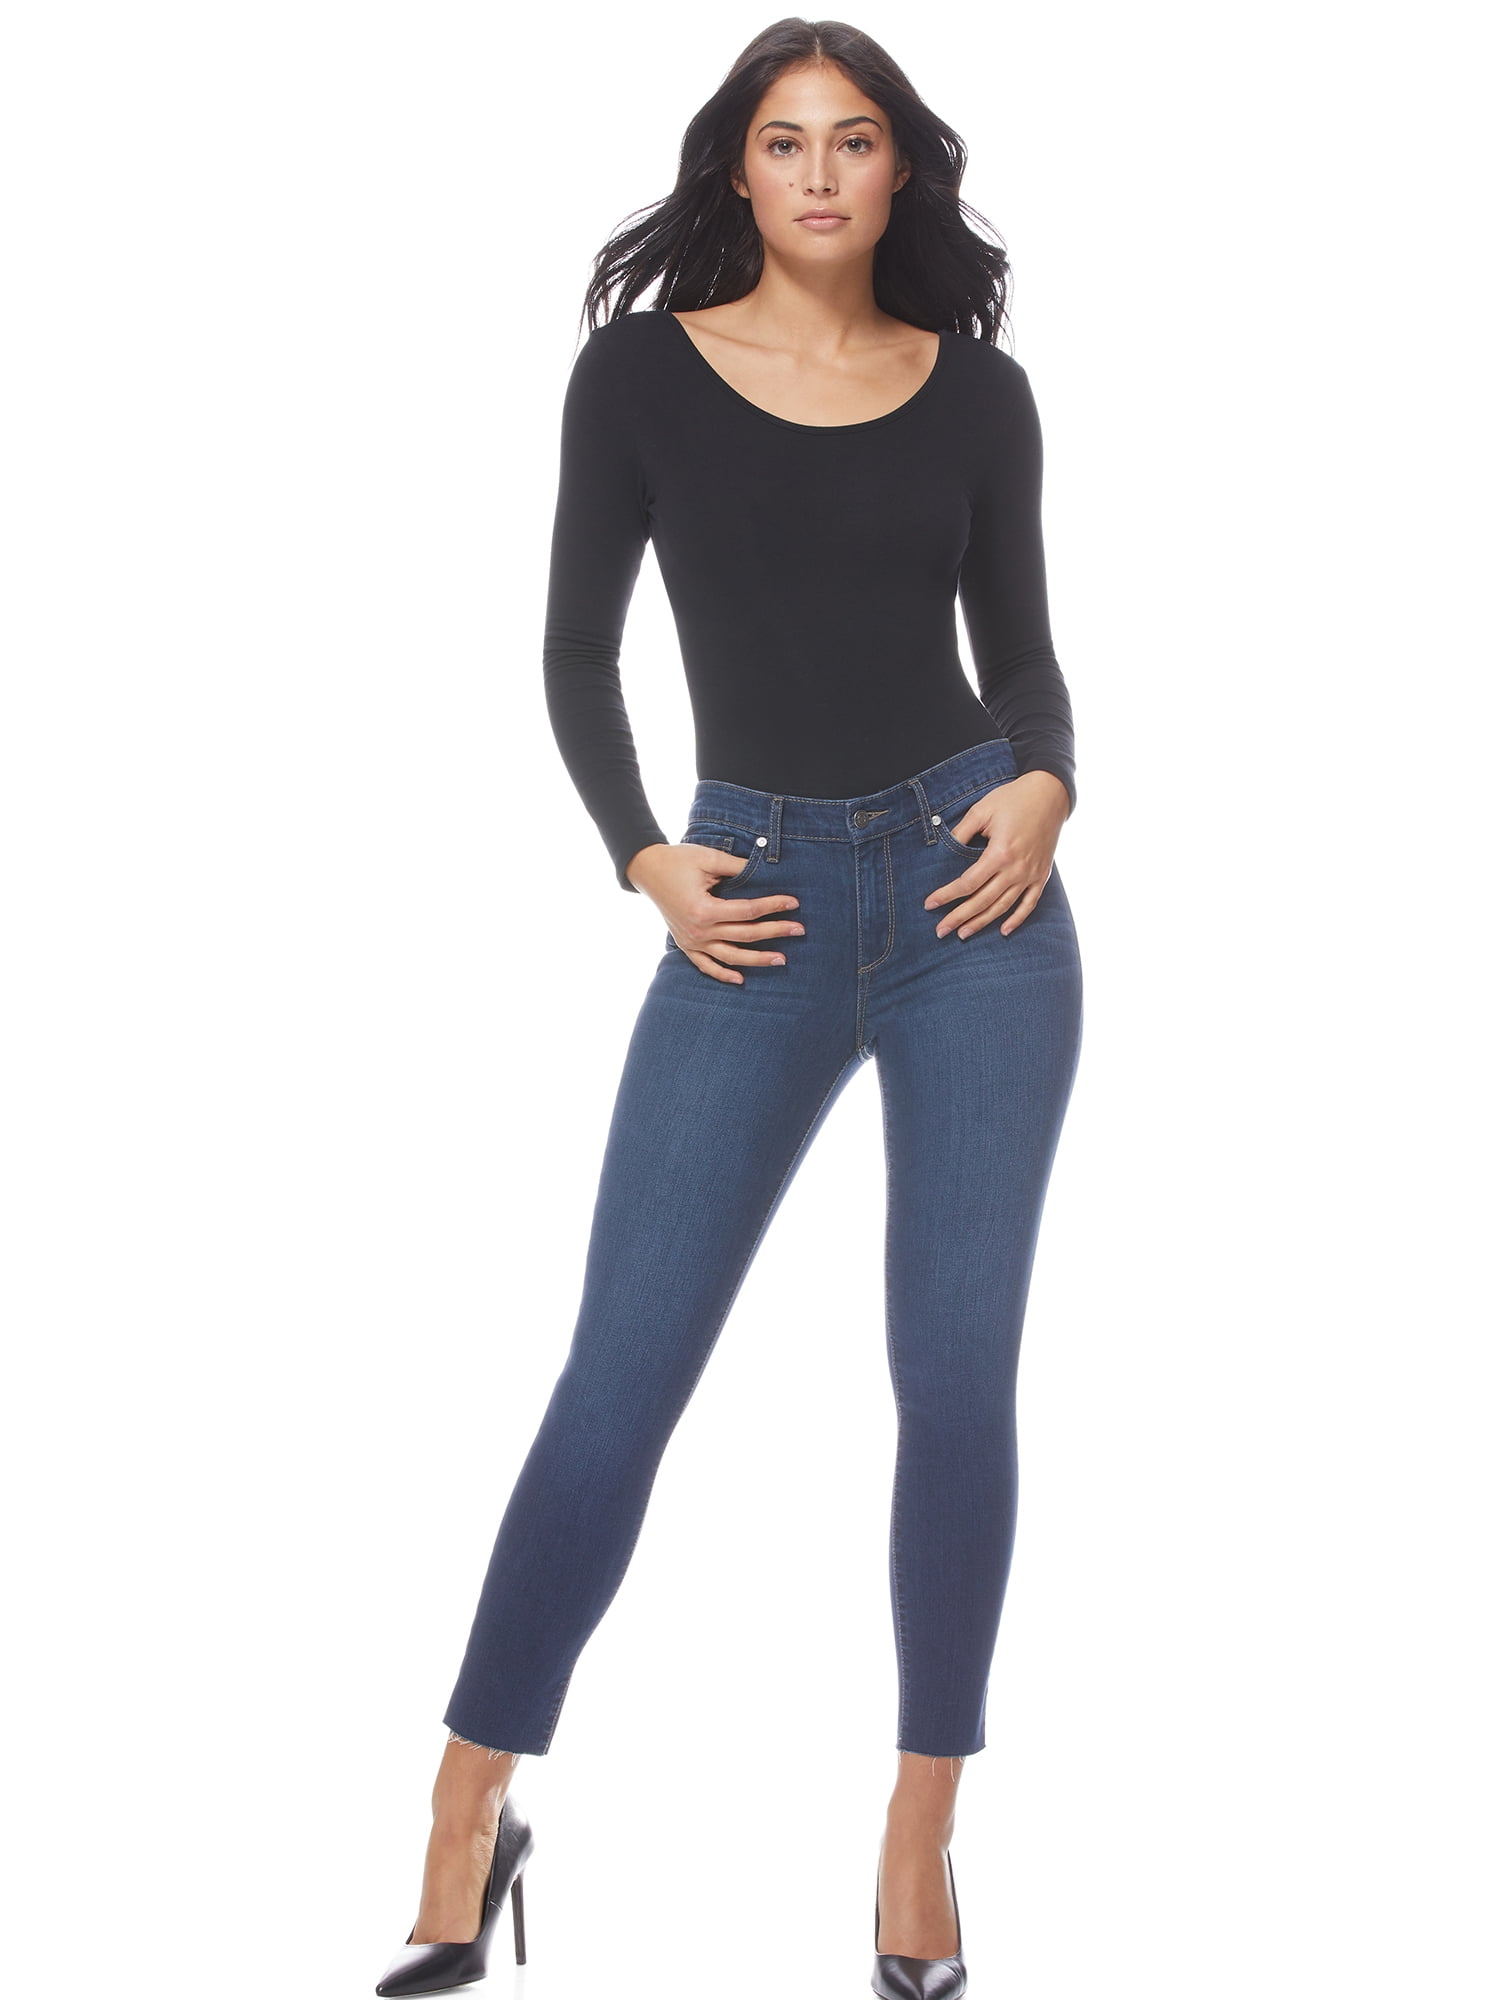 Sofia Vergara Models Her Walmart Skinny Jeans With Cherry Red